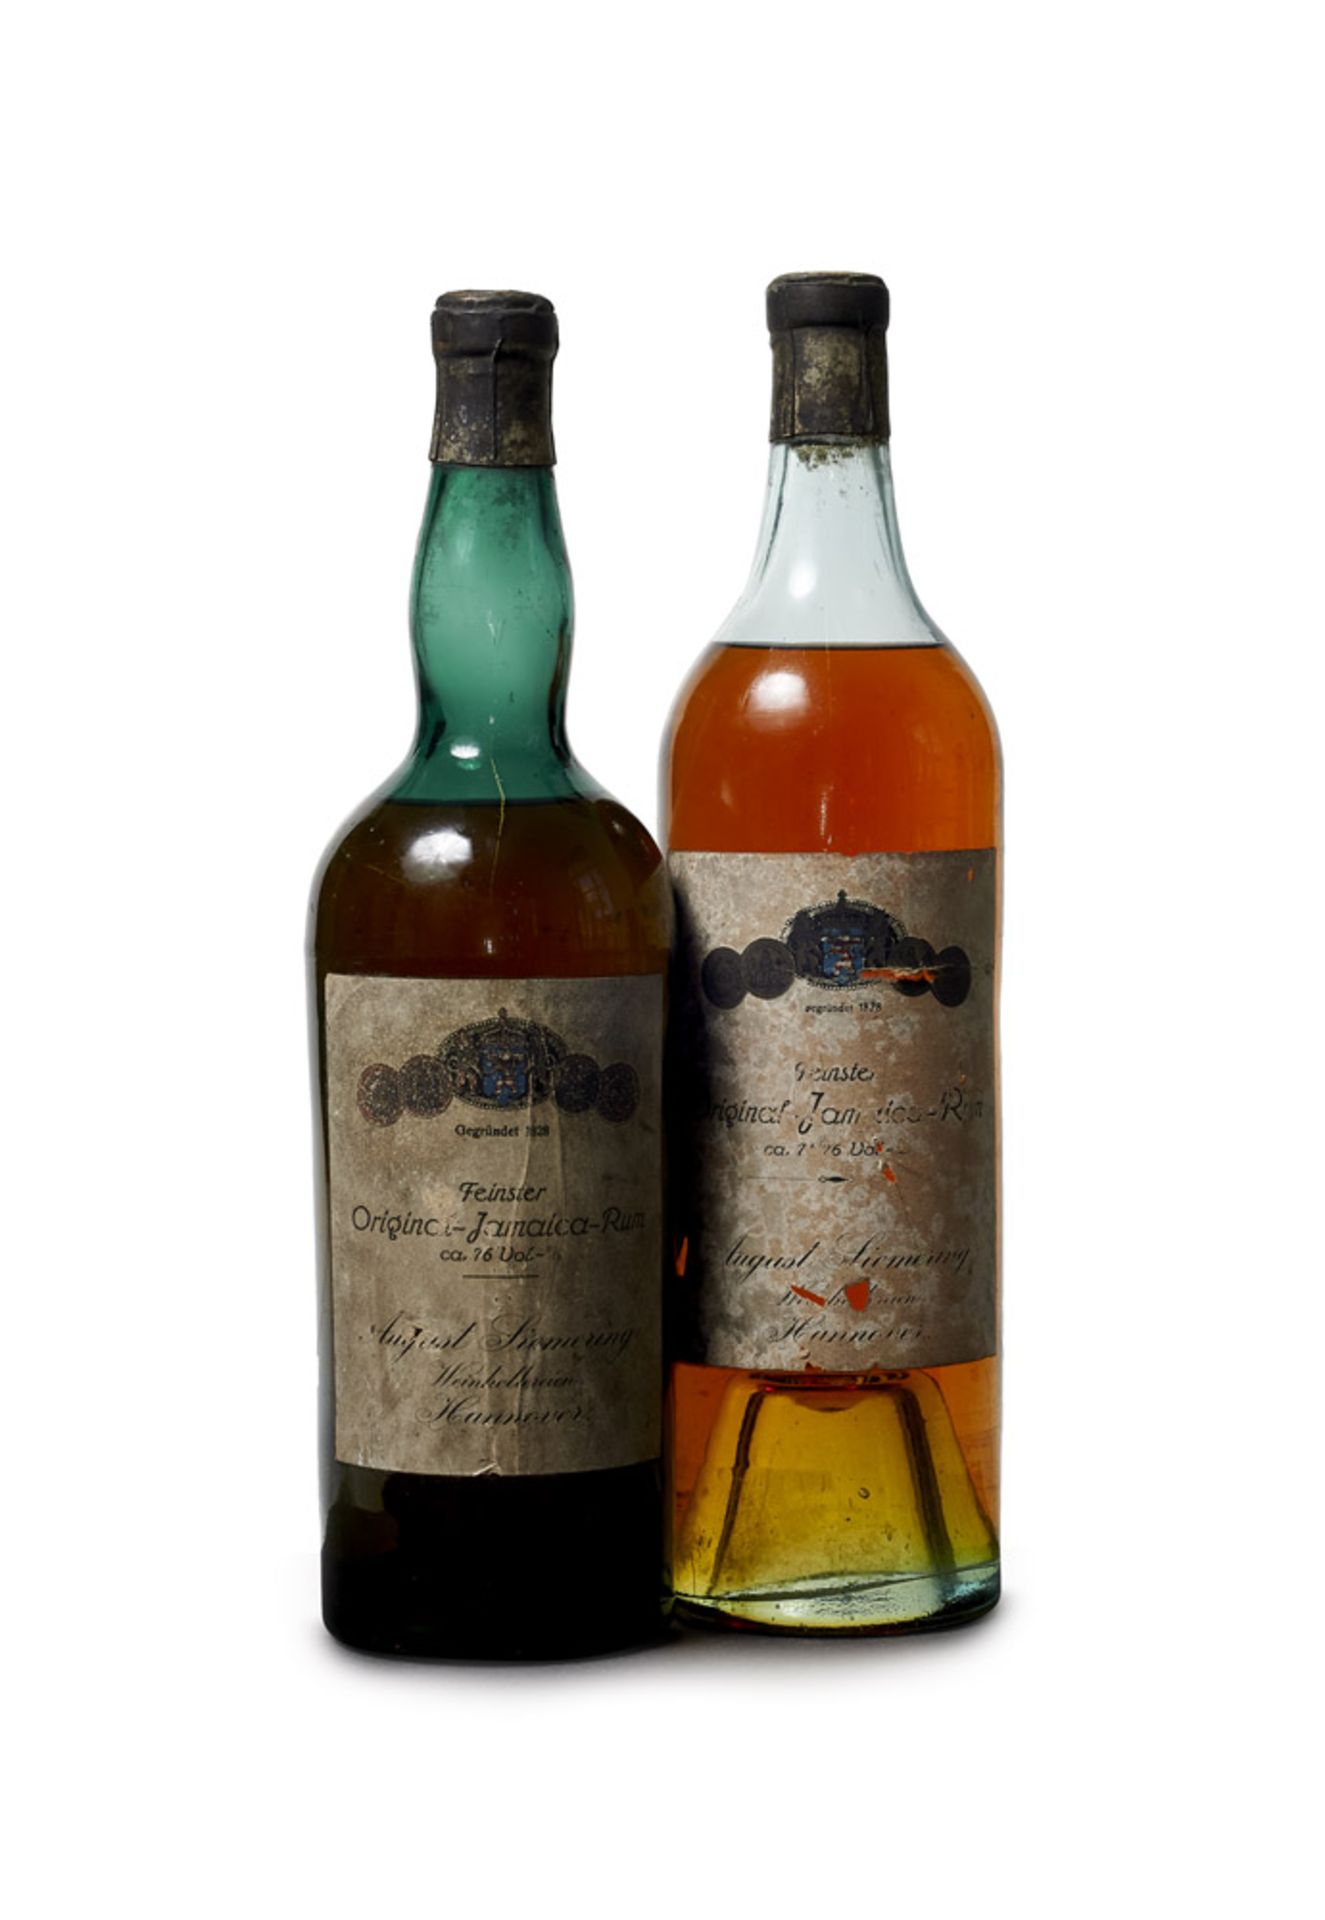 Spirituosen - Rum - - 2 Flaschen Feinster Original-Jamaica-Rum, ca. 76 Vol. August Si